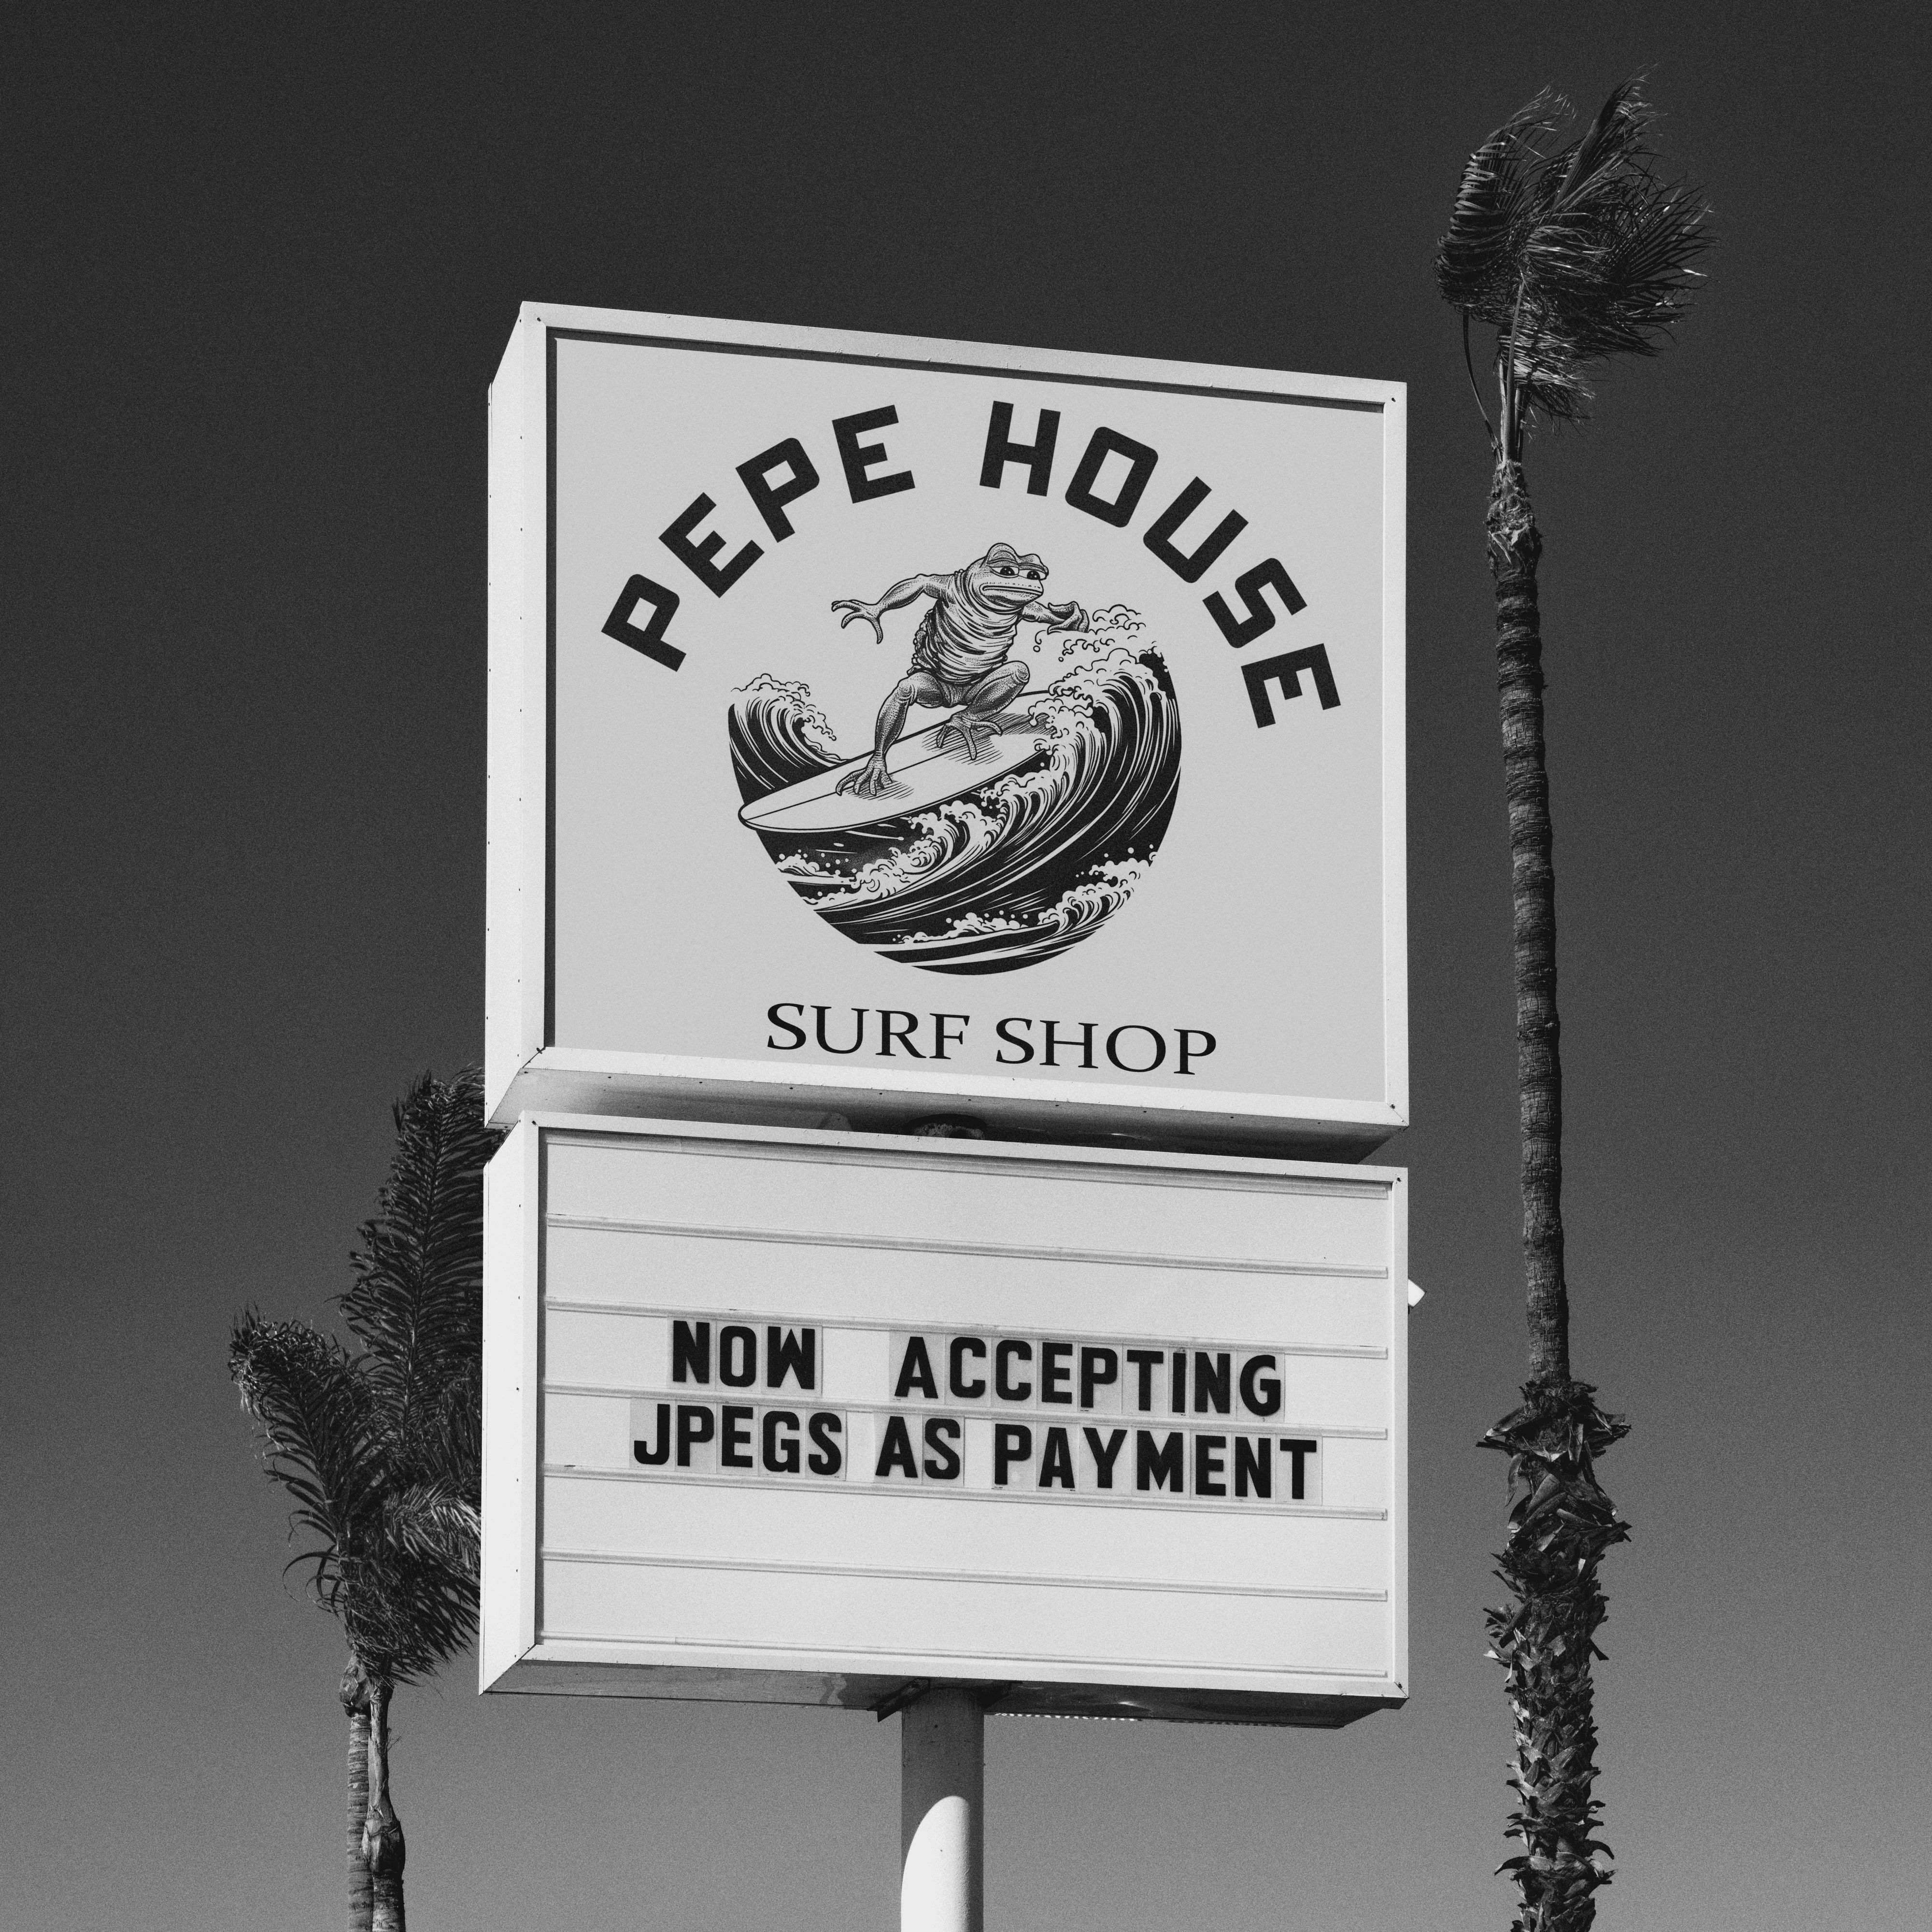 Pepe House